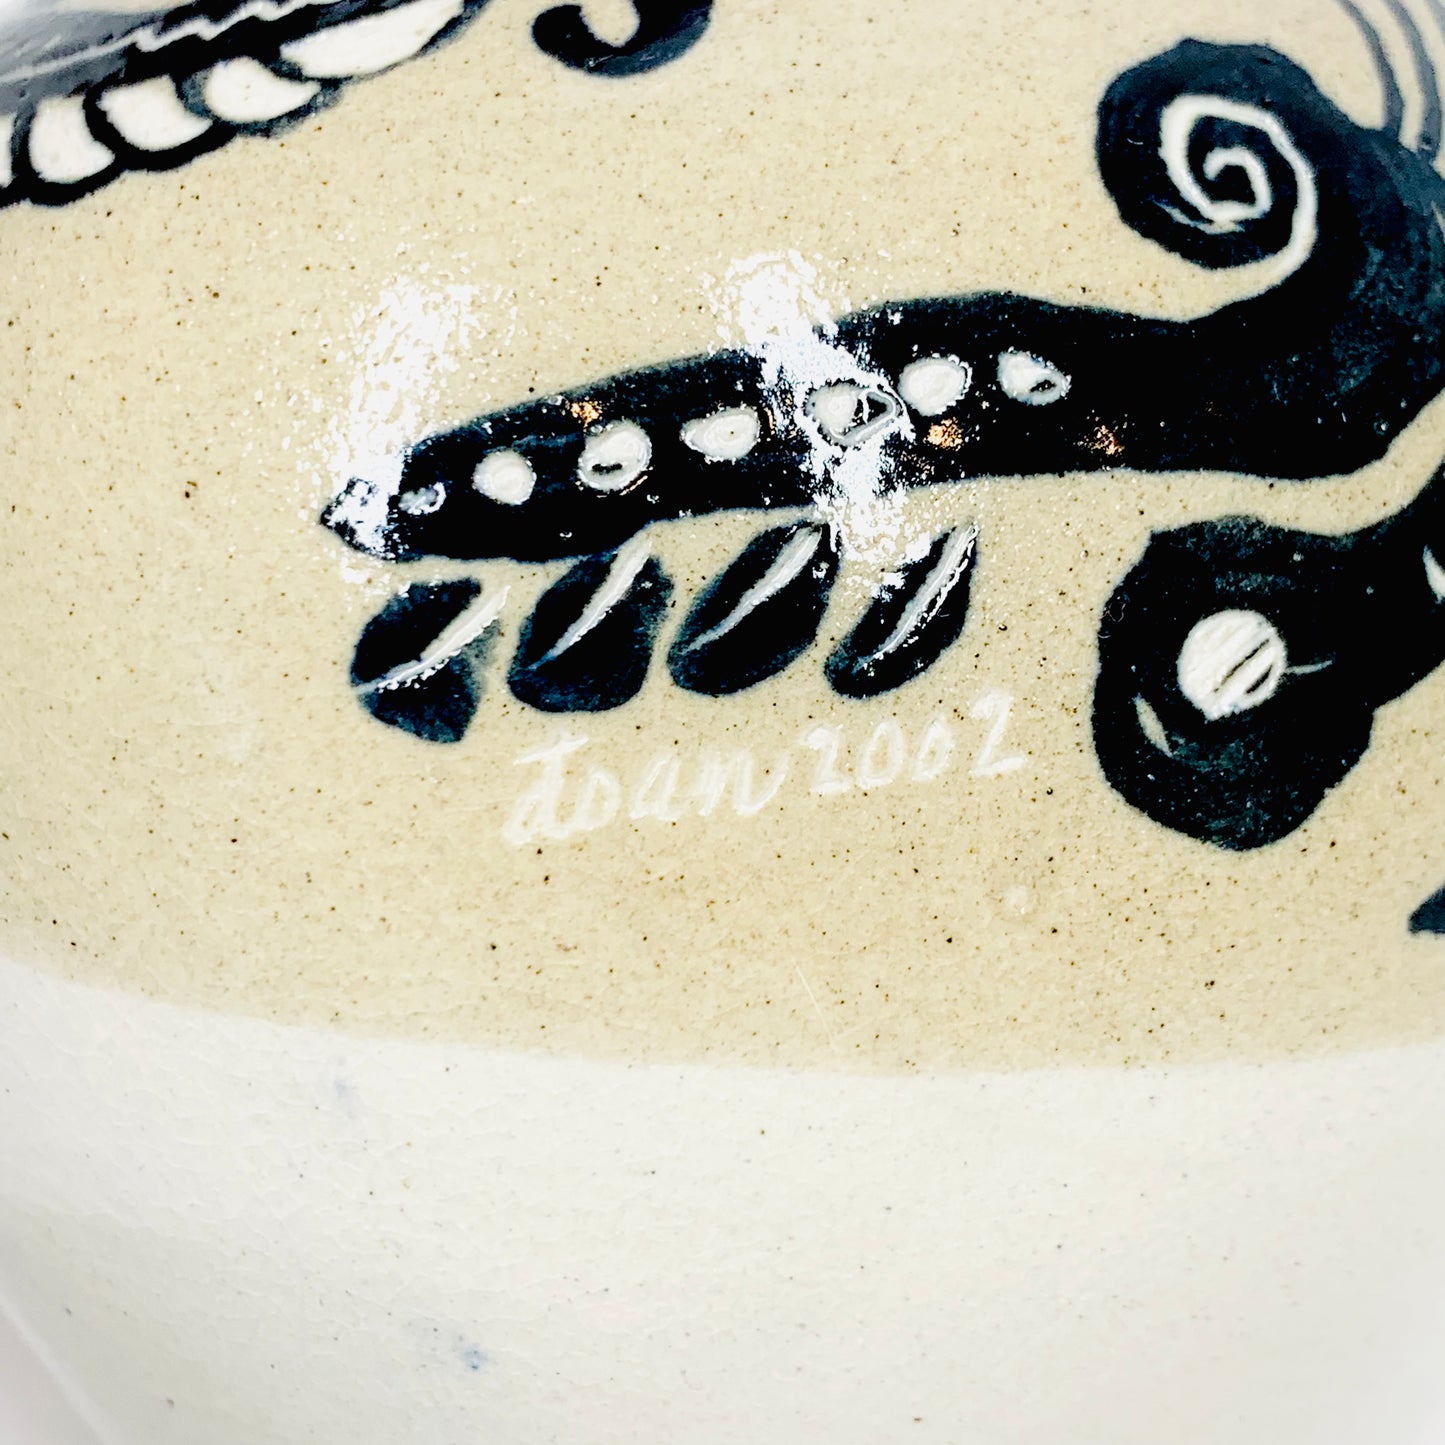 Vintage modernist style Vietnamese hand painted pottery vase